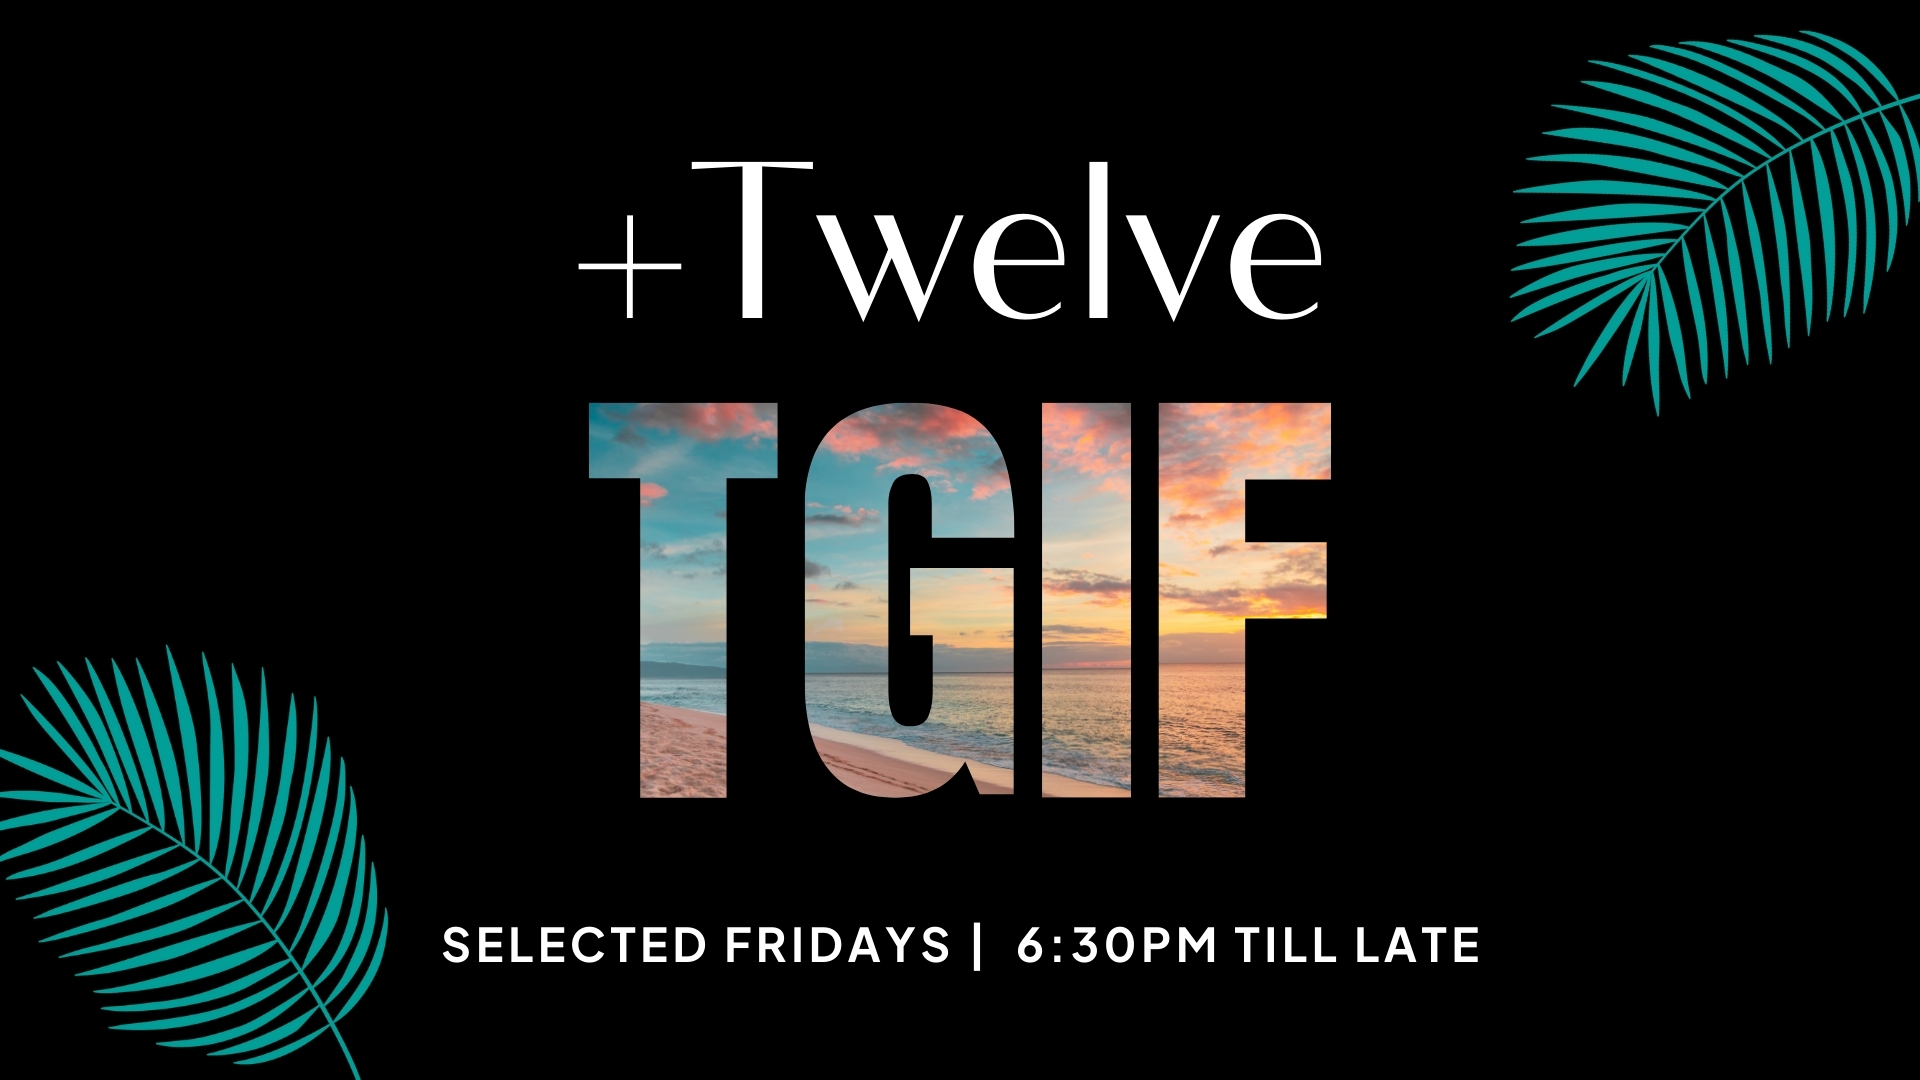 TGIF Themed Nights at +Twelve